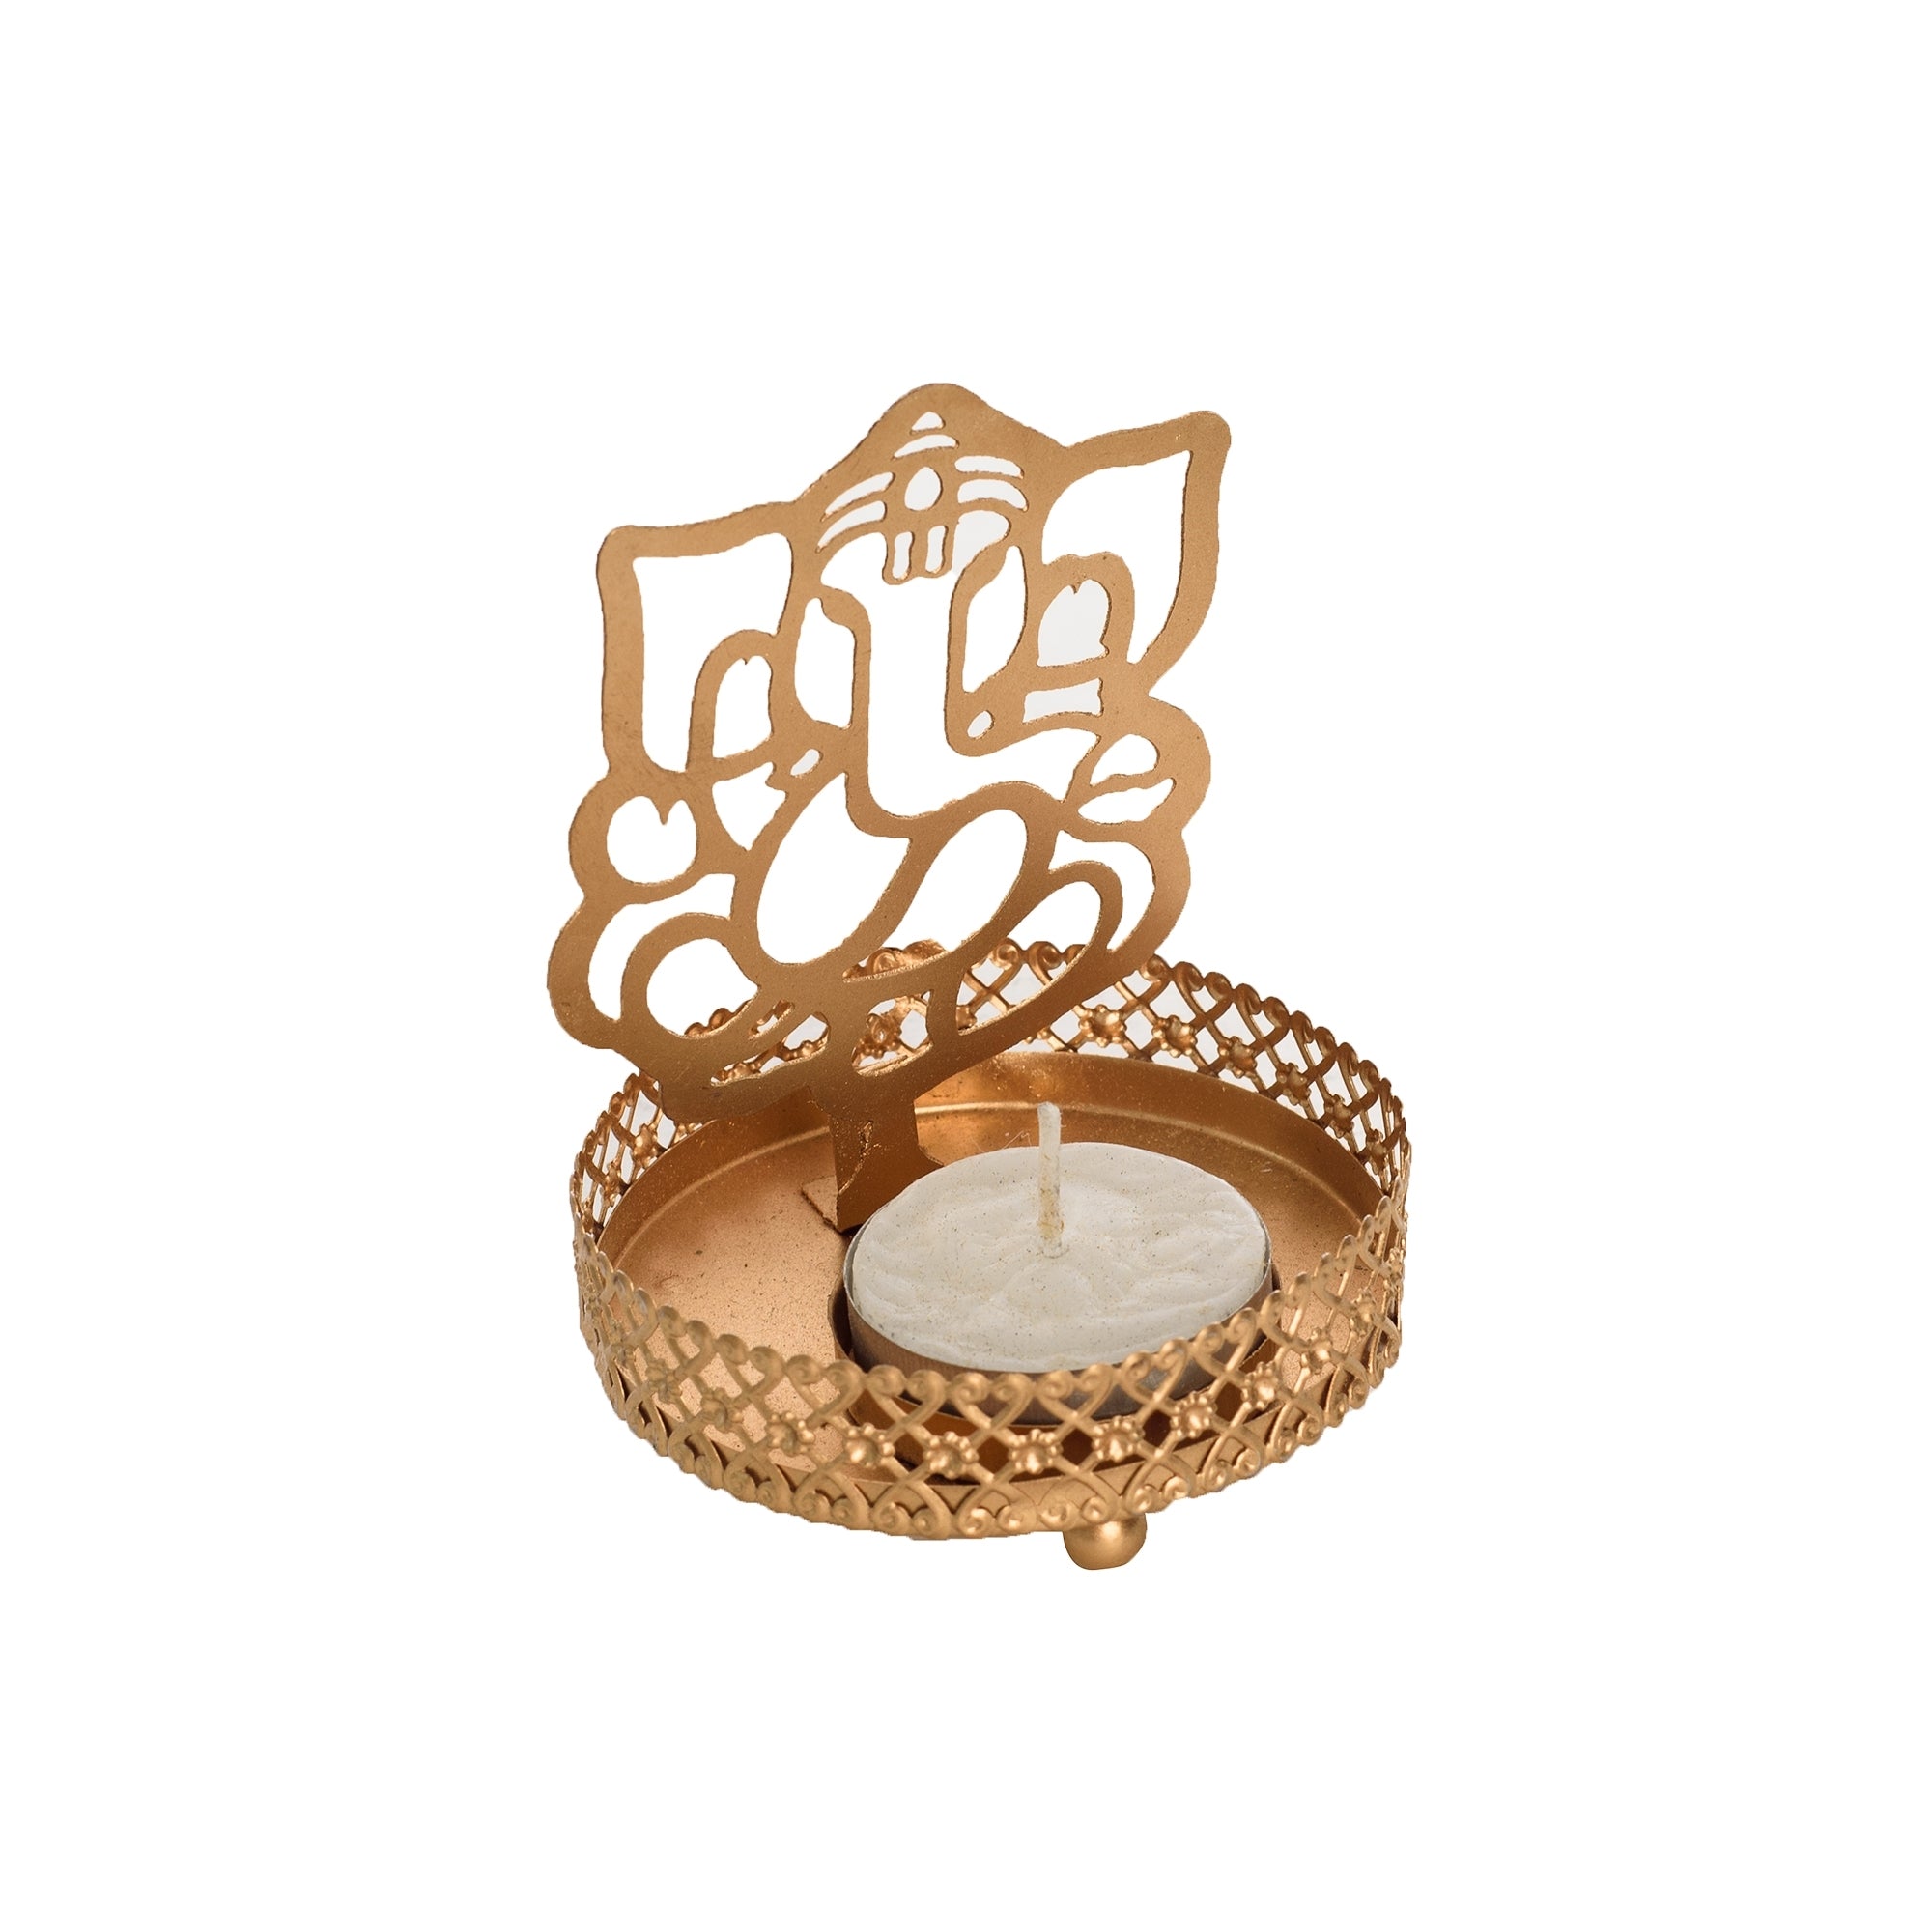 Metal Golden Lord Ganesha tea light candle holder that cast shadows 4